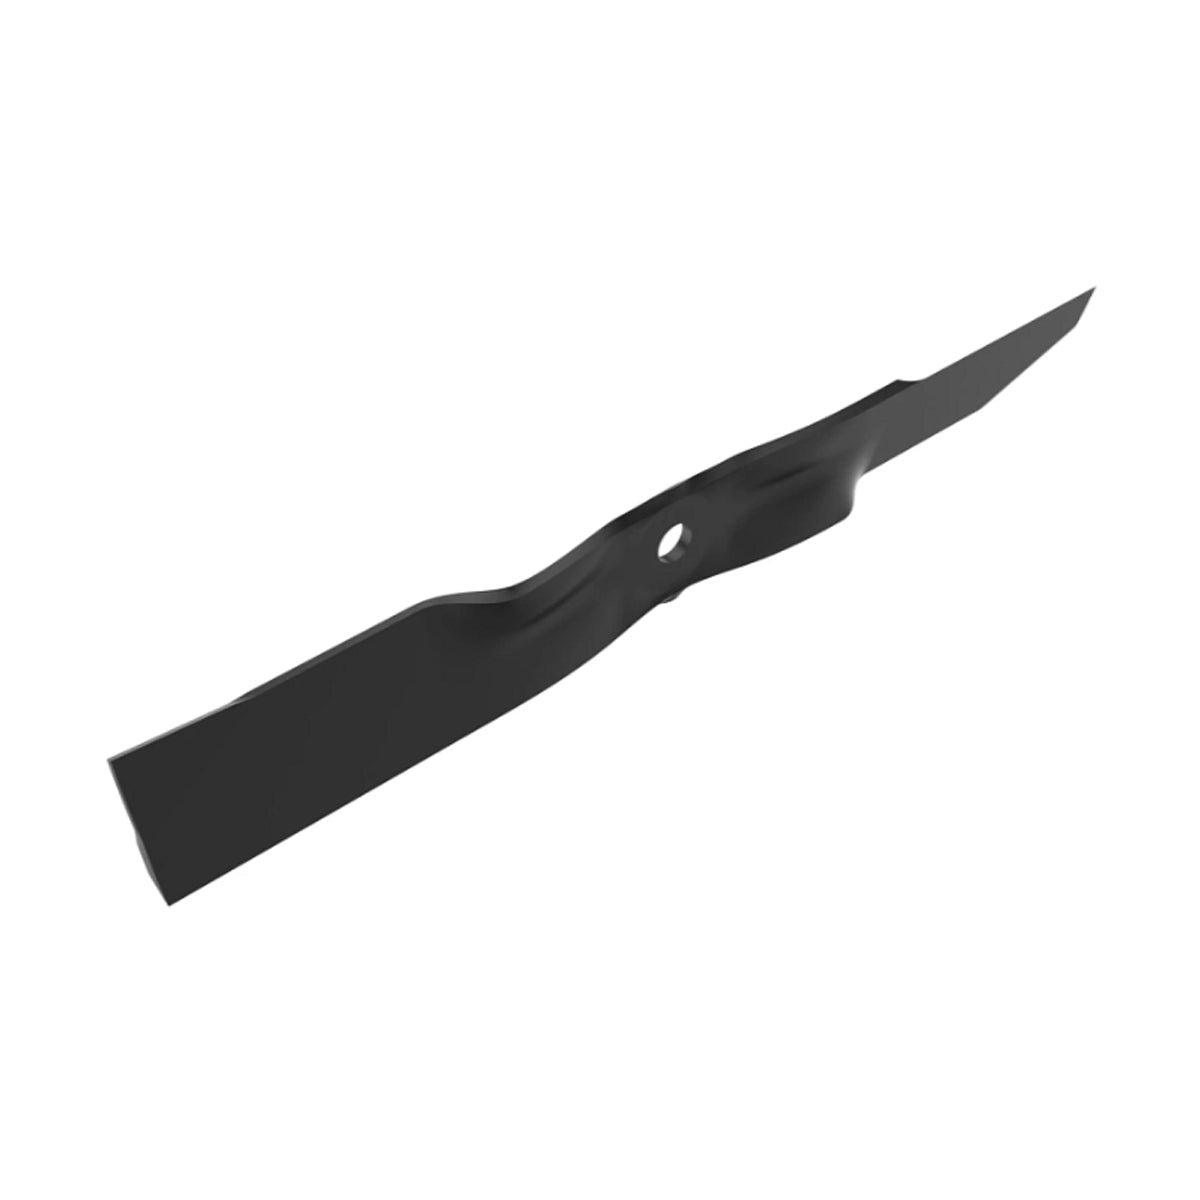 John Deere Mower Blade (Standard) for Select Series with 62" Deck - M143504